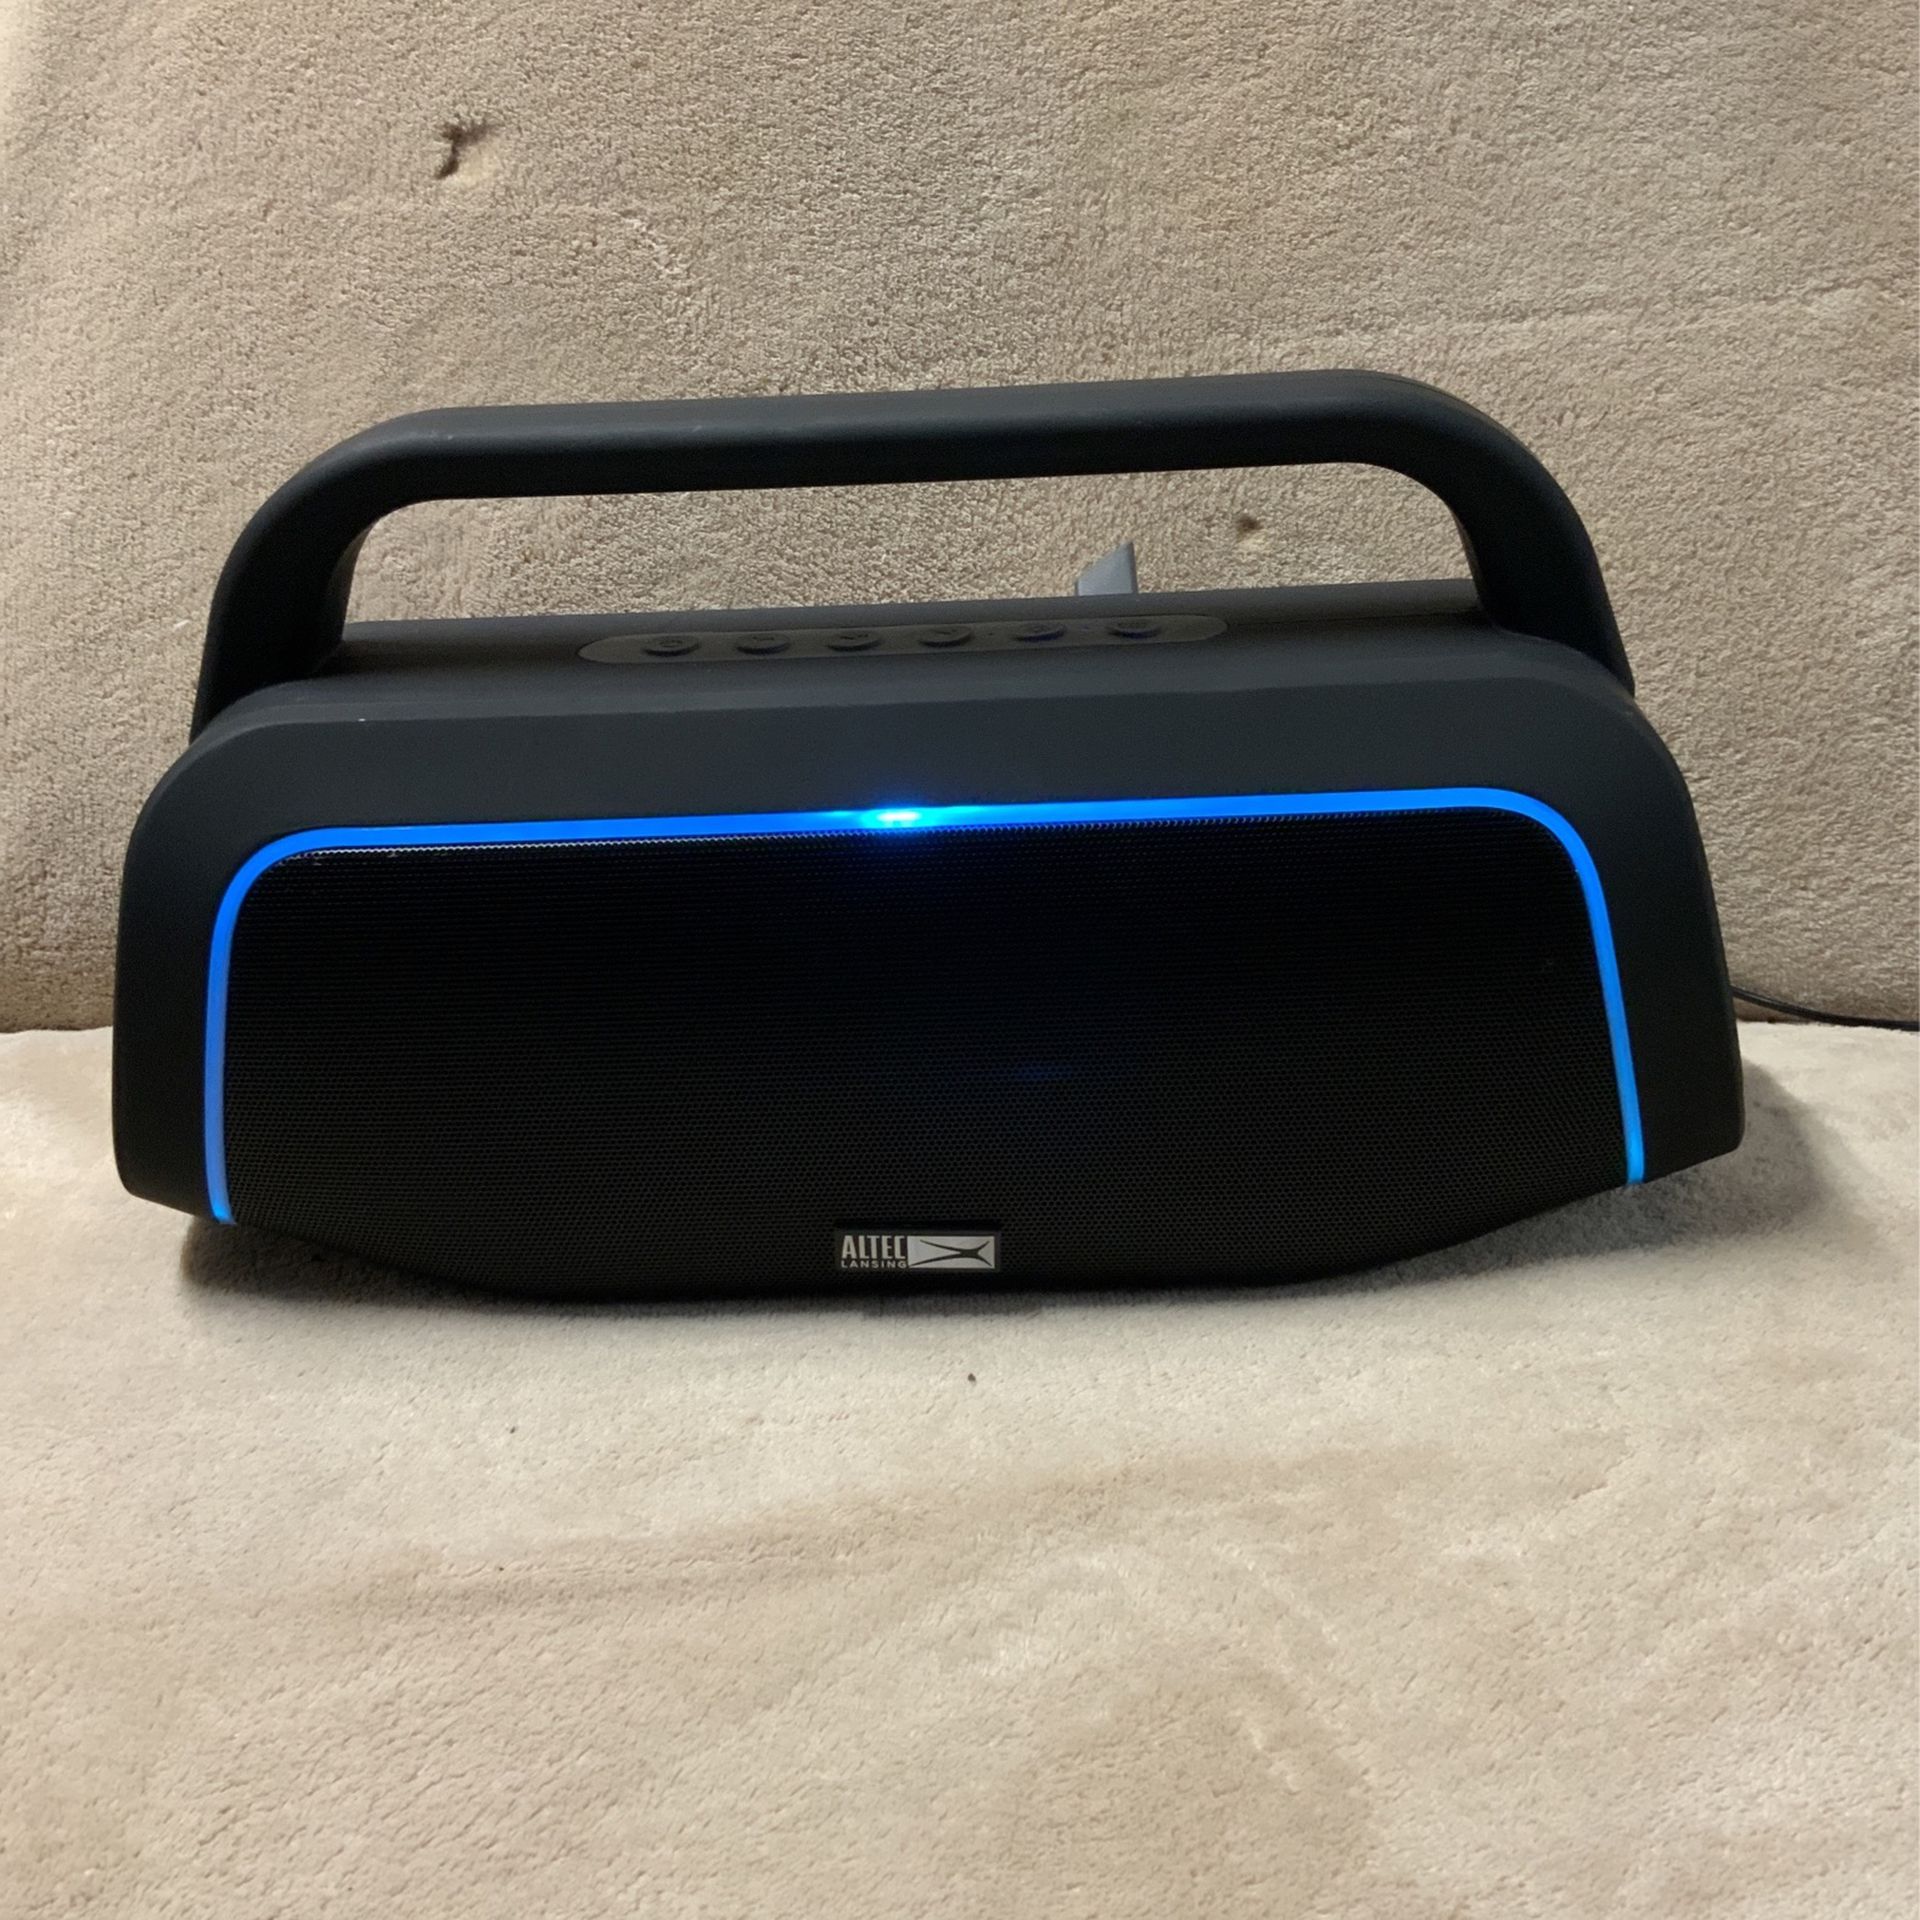 Altec Lansing IMT7013 Extra bass portable Bluetooth speaker